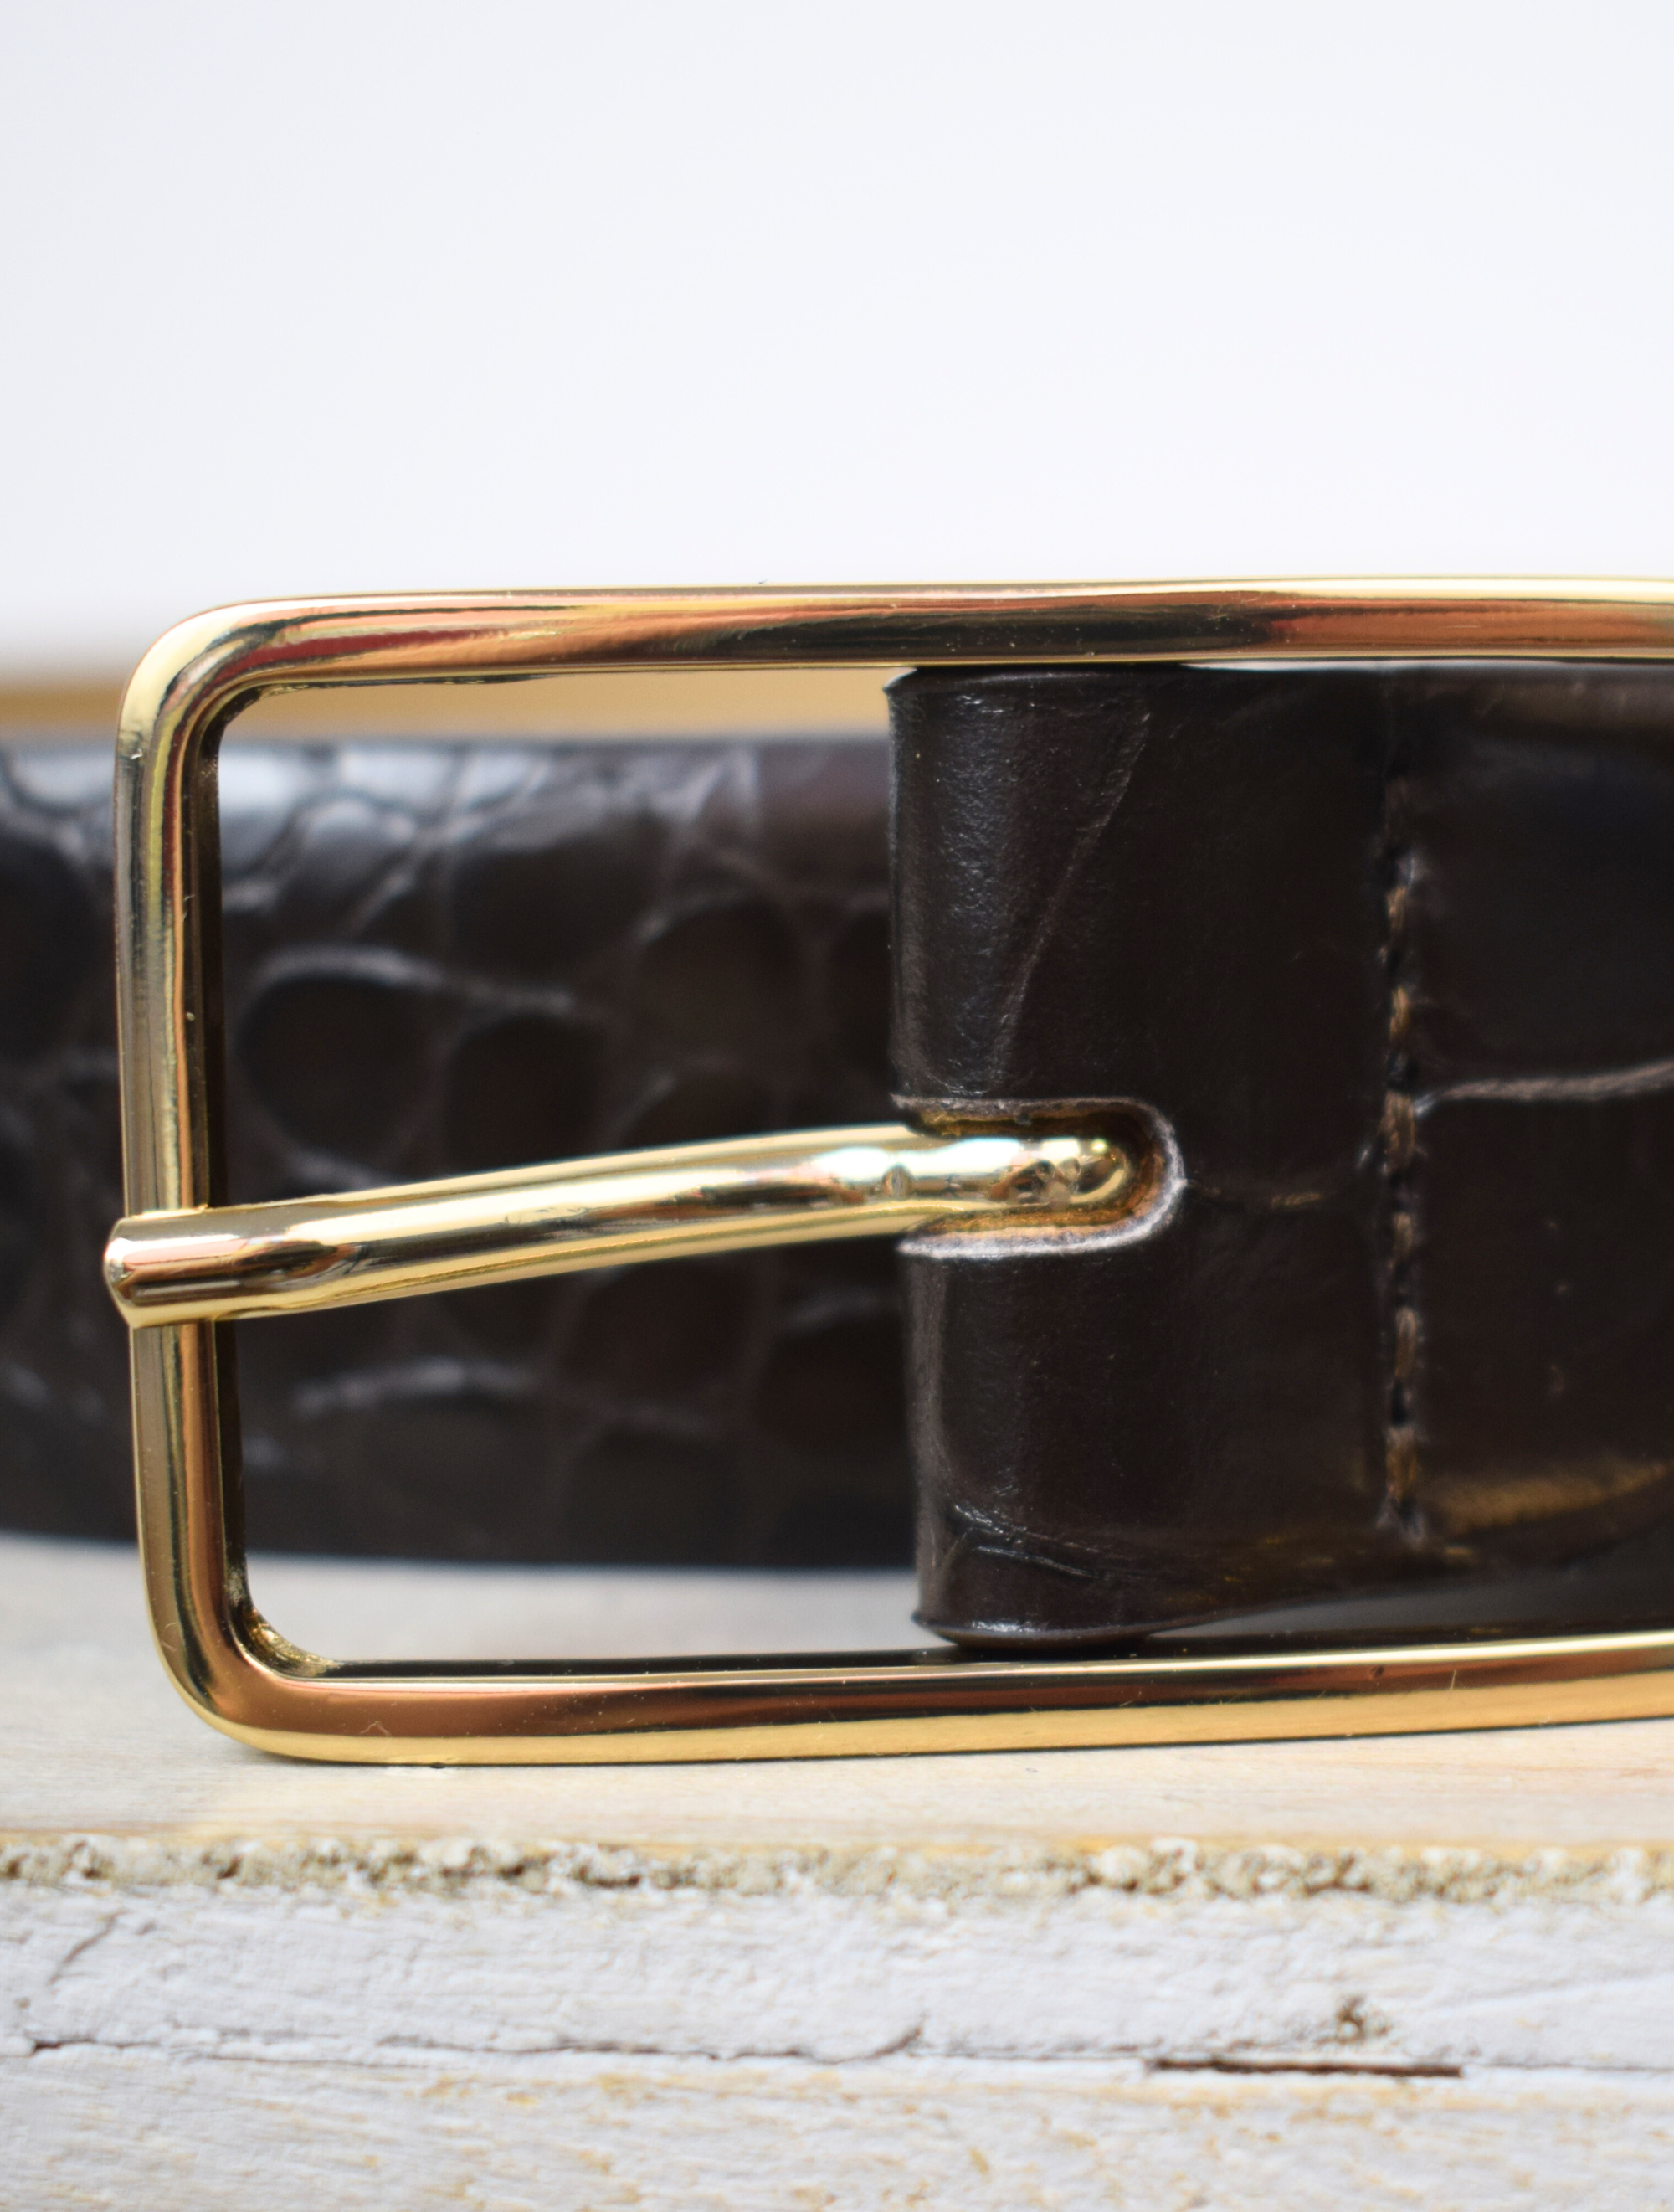 Medium mock croc dark brown leather belt with gold metallic oblong buckle